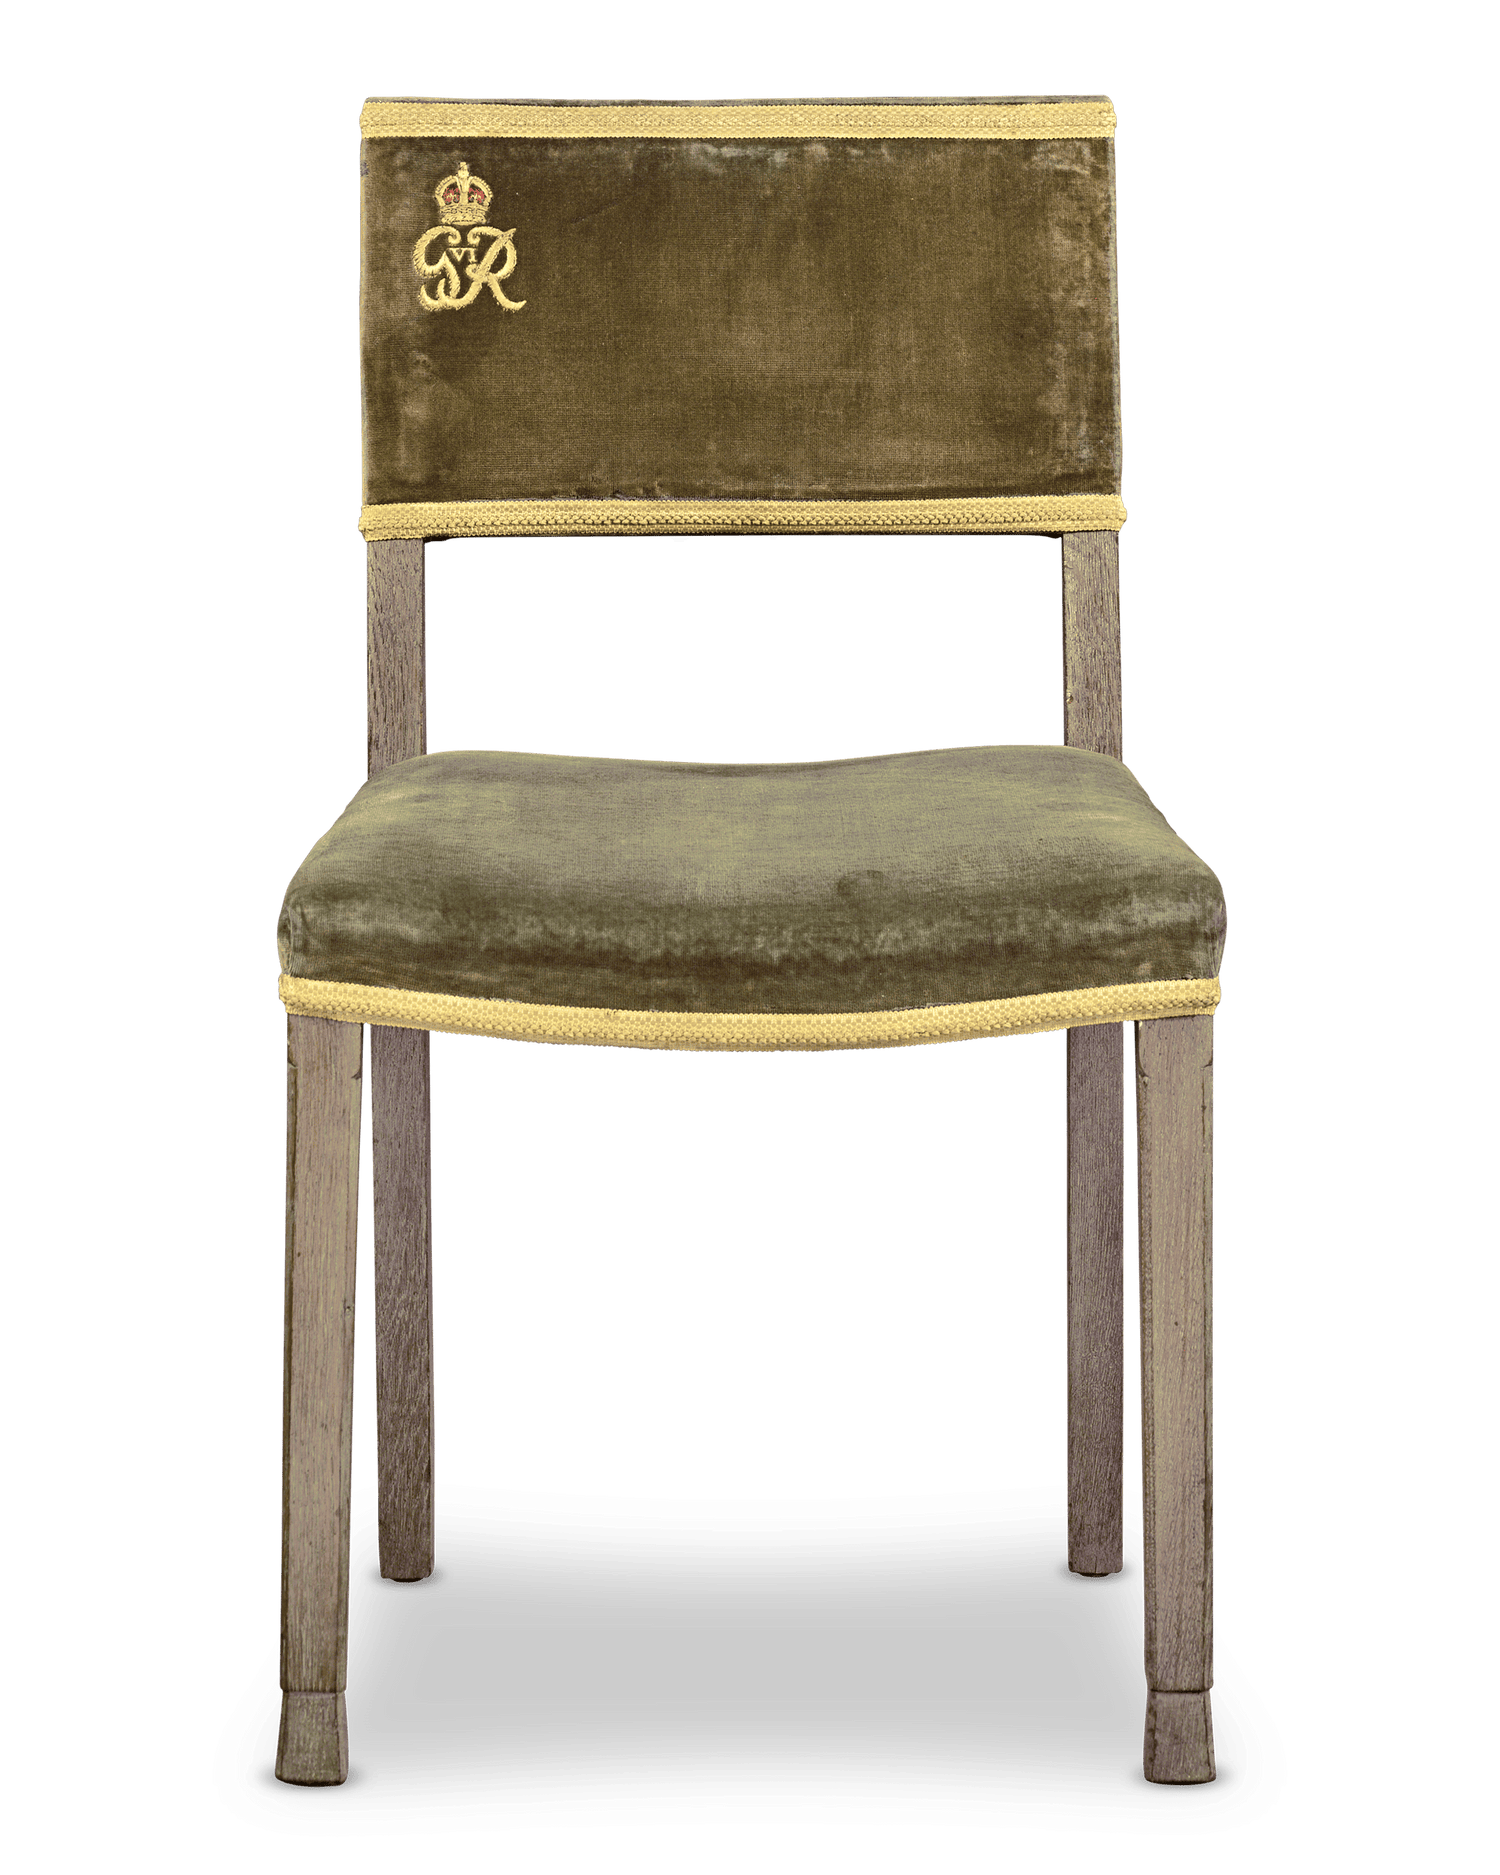 King George VI Coronation Chairs